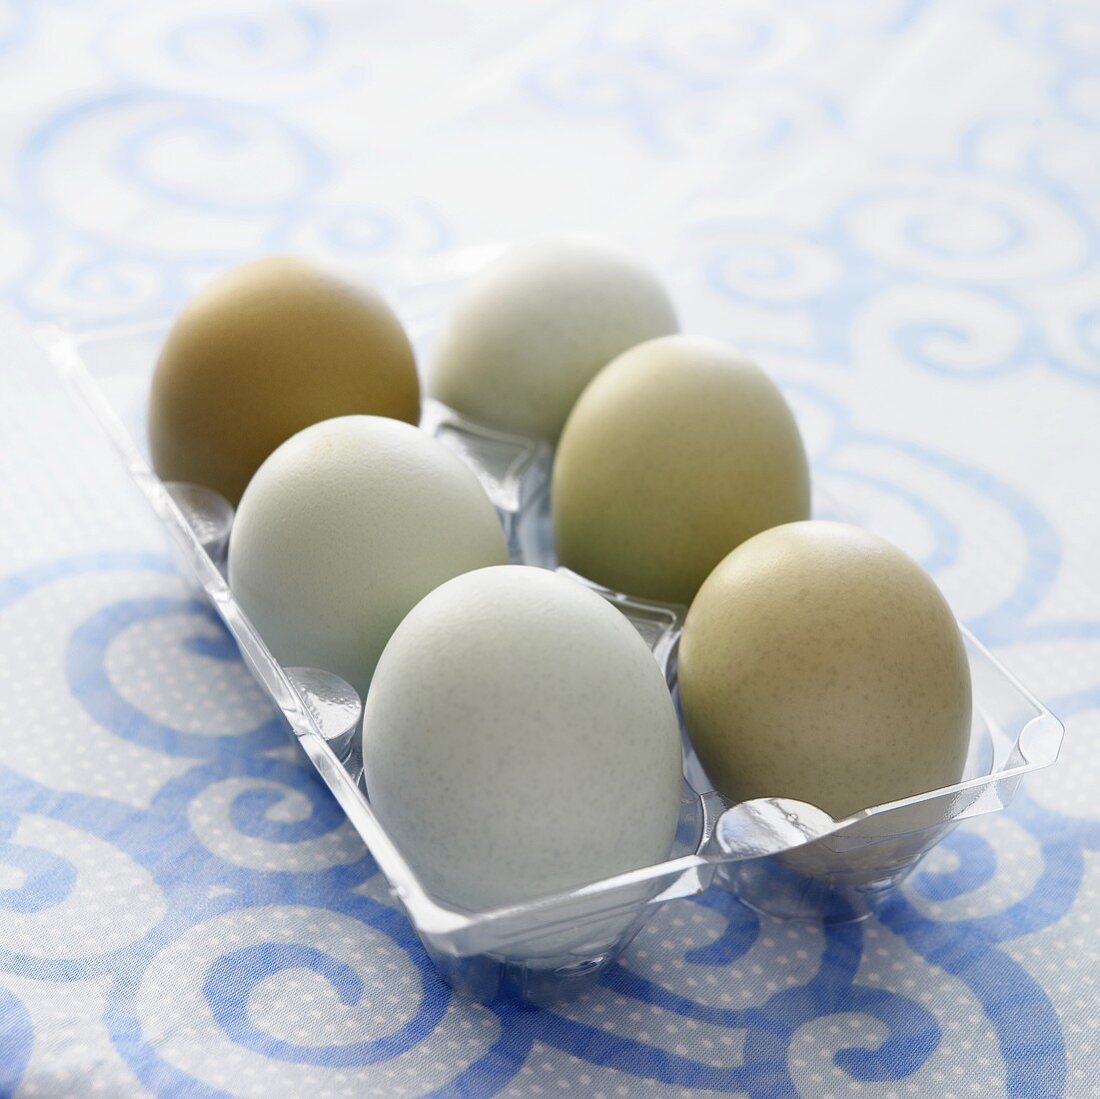 Six Free Range Hen Eggs in Plastic Container